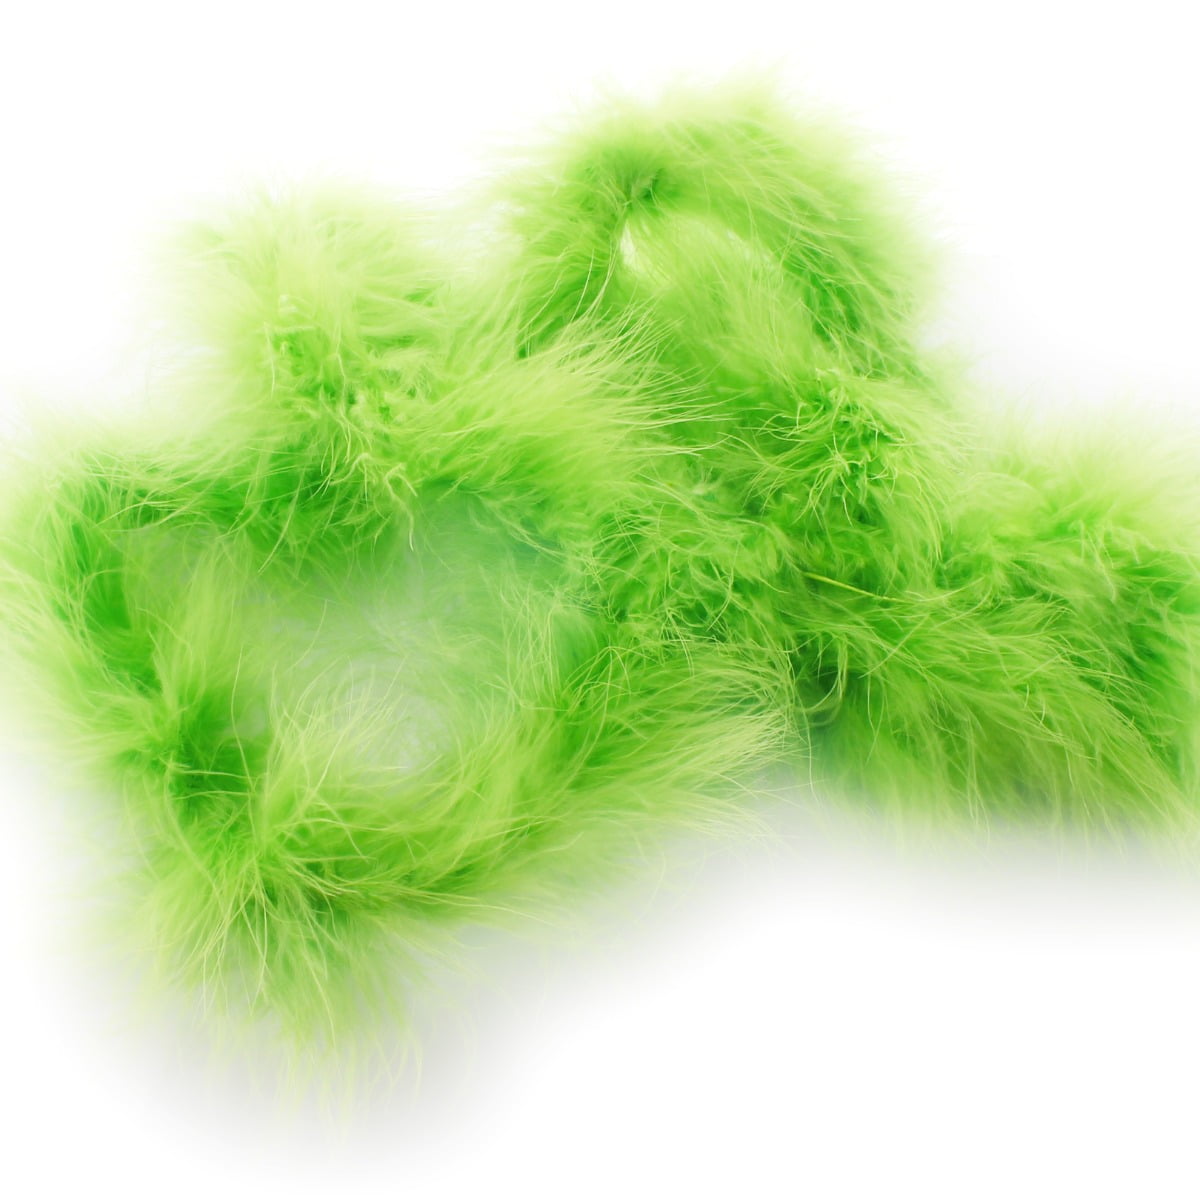 Full Marabou Feather Boa - 2 Yards - Emerald Green 